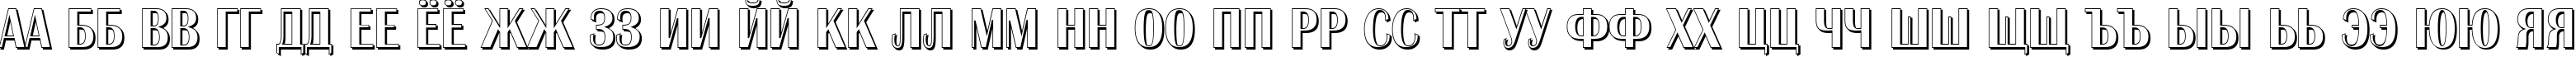 Пример написания русского алфавита шрифтом a_AlbionicTitulNrSh